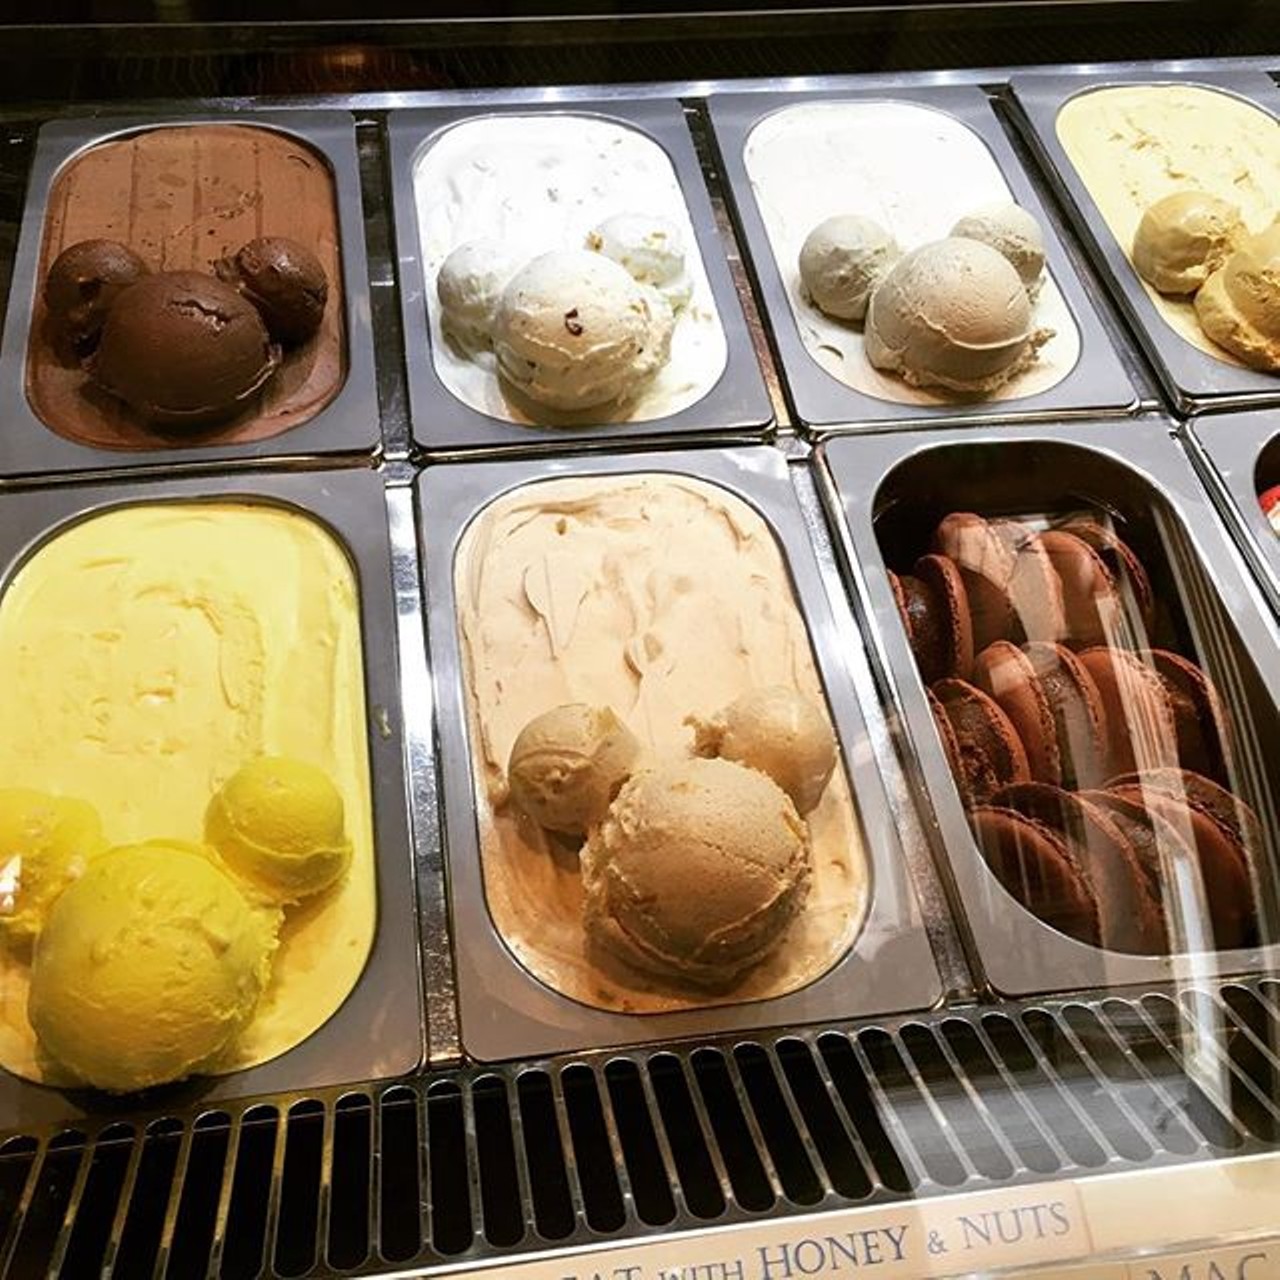 The ice cream at Epcot's France Pavilion.
Photo via @iowastate_jay